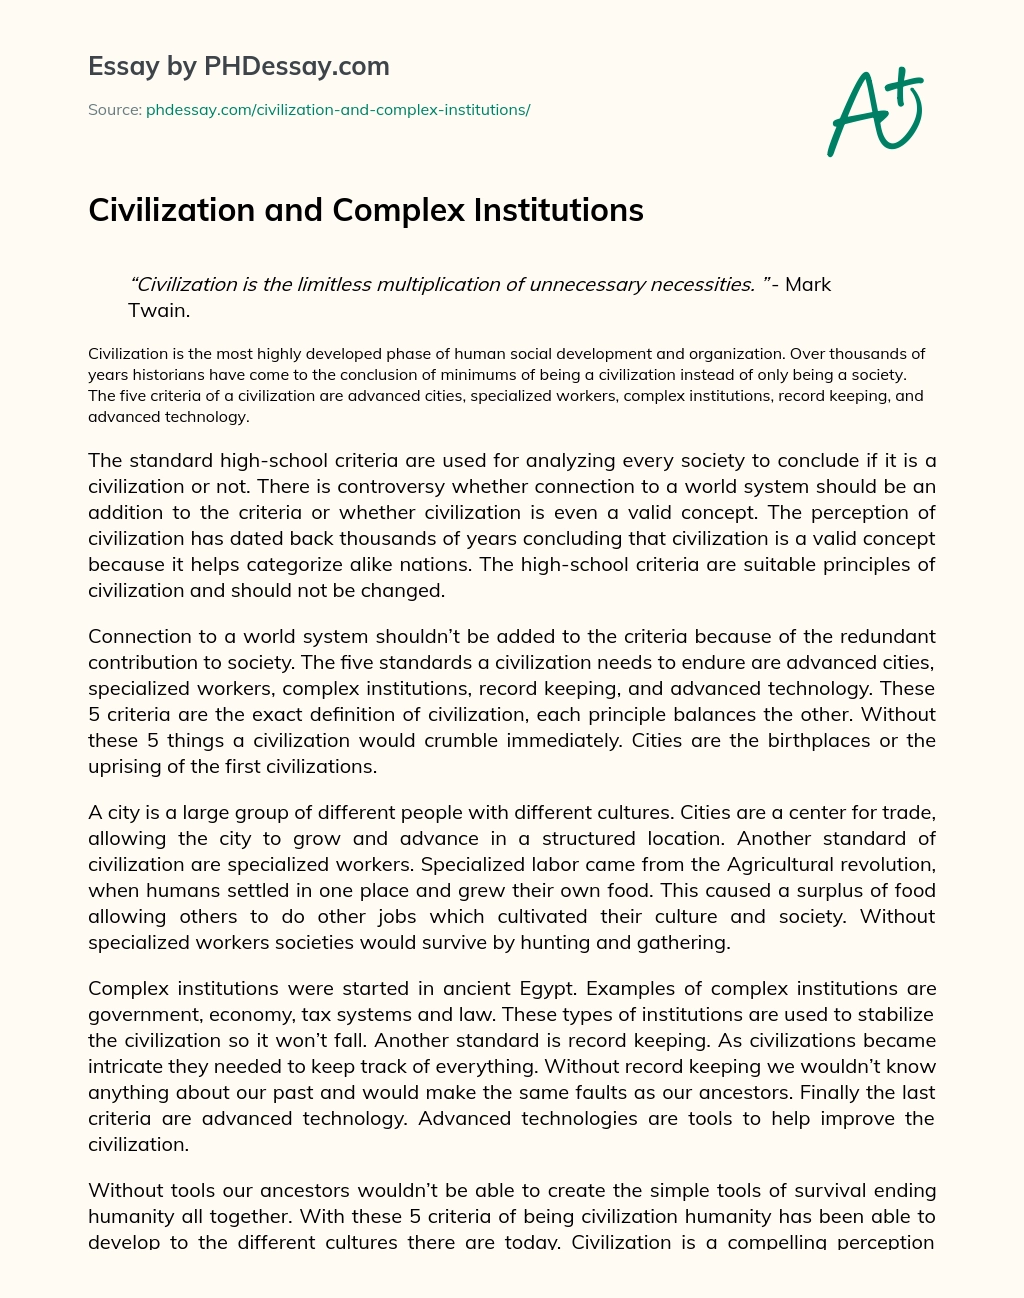 Civilization and Complex Institutions essay